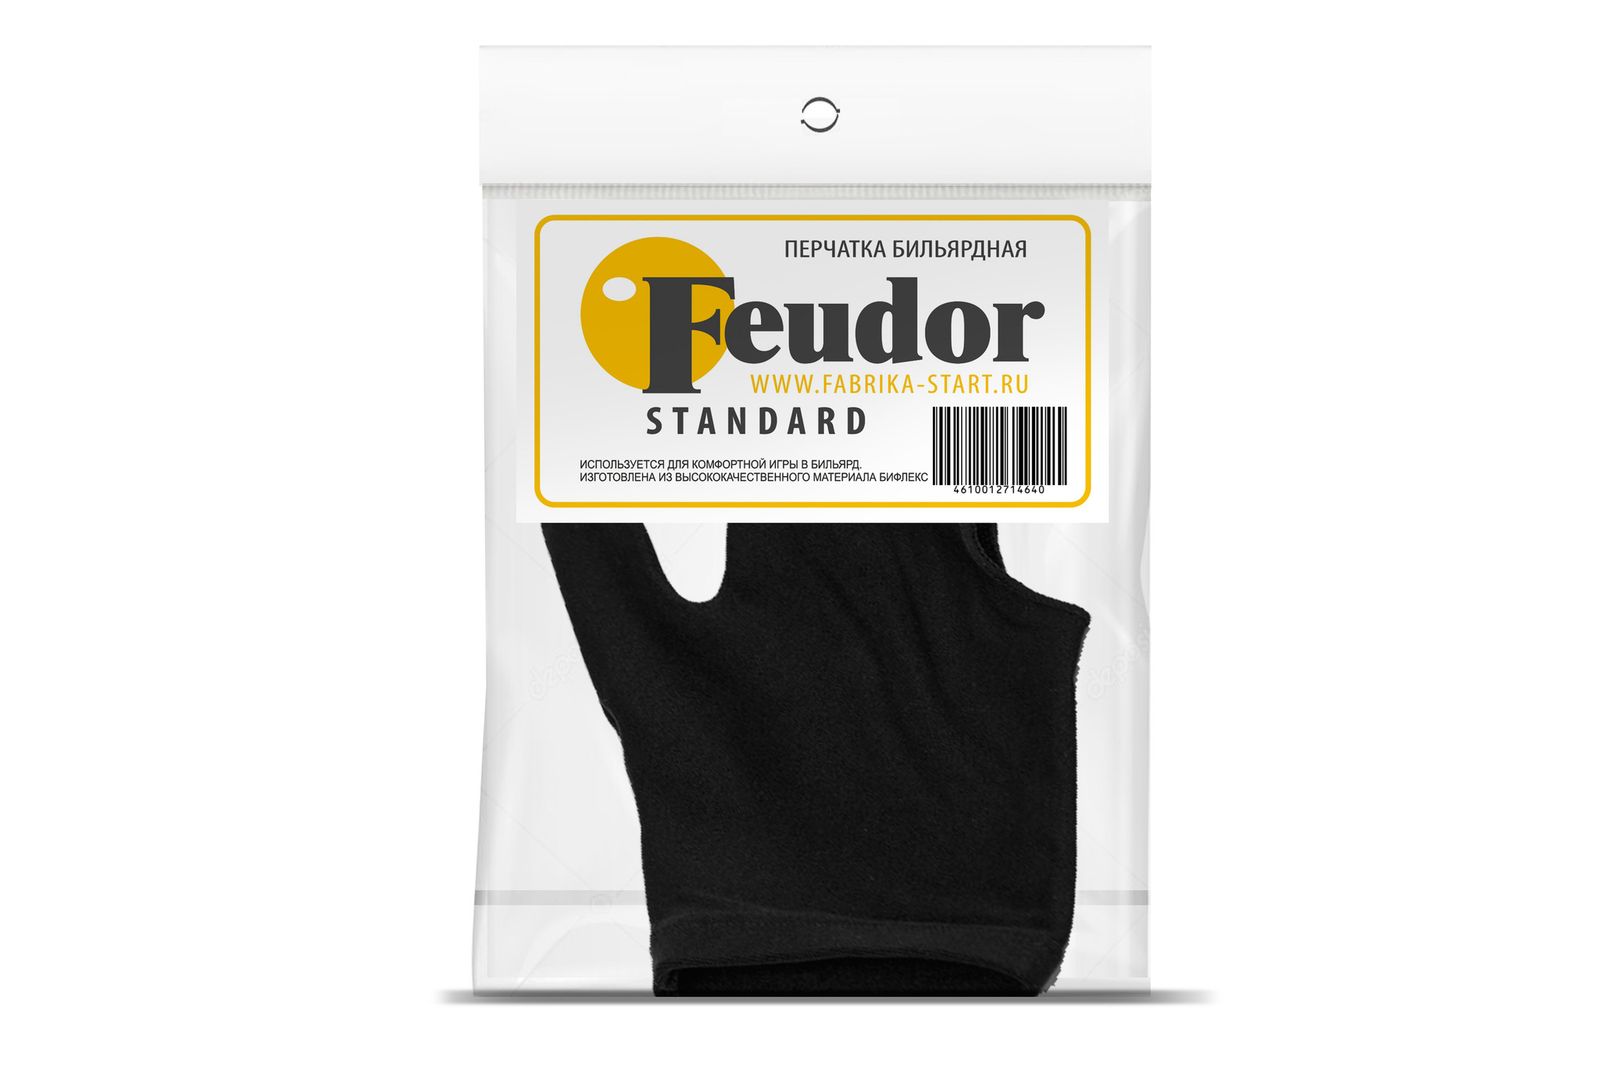 Перчатка-бильярдная Feudor Standard black XL фото №5